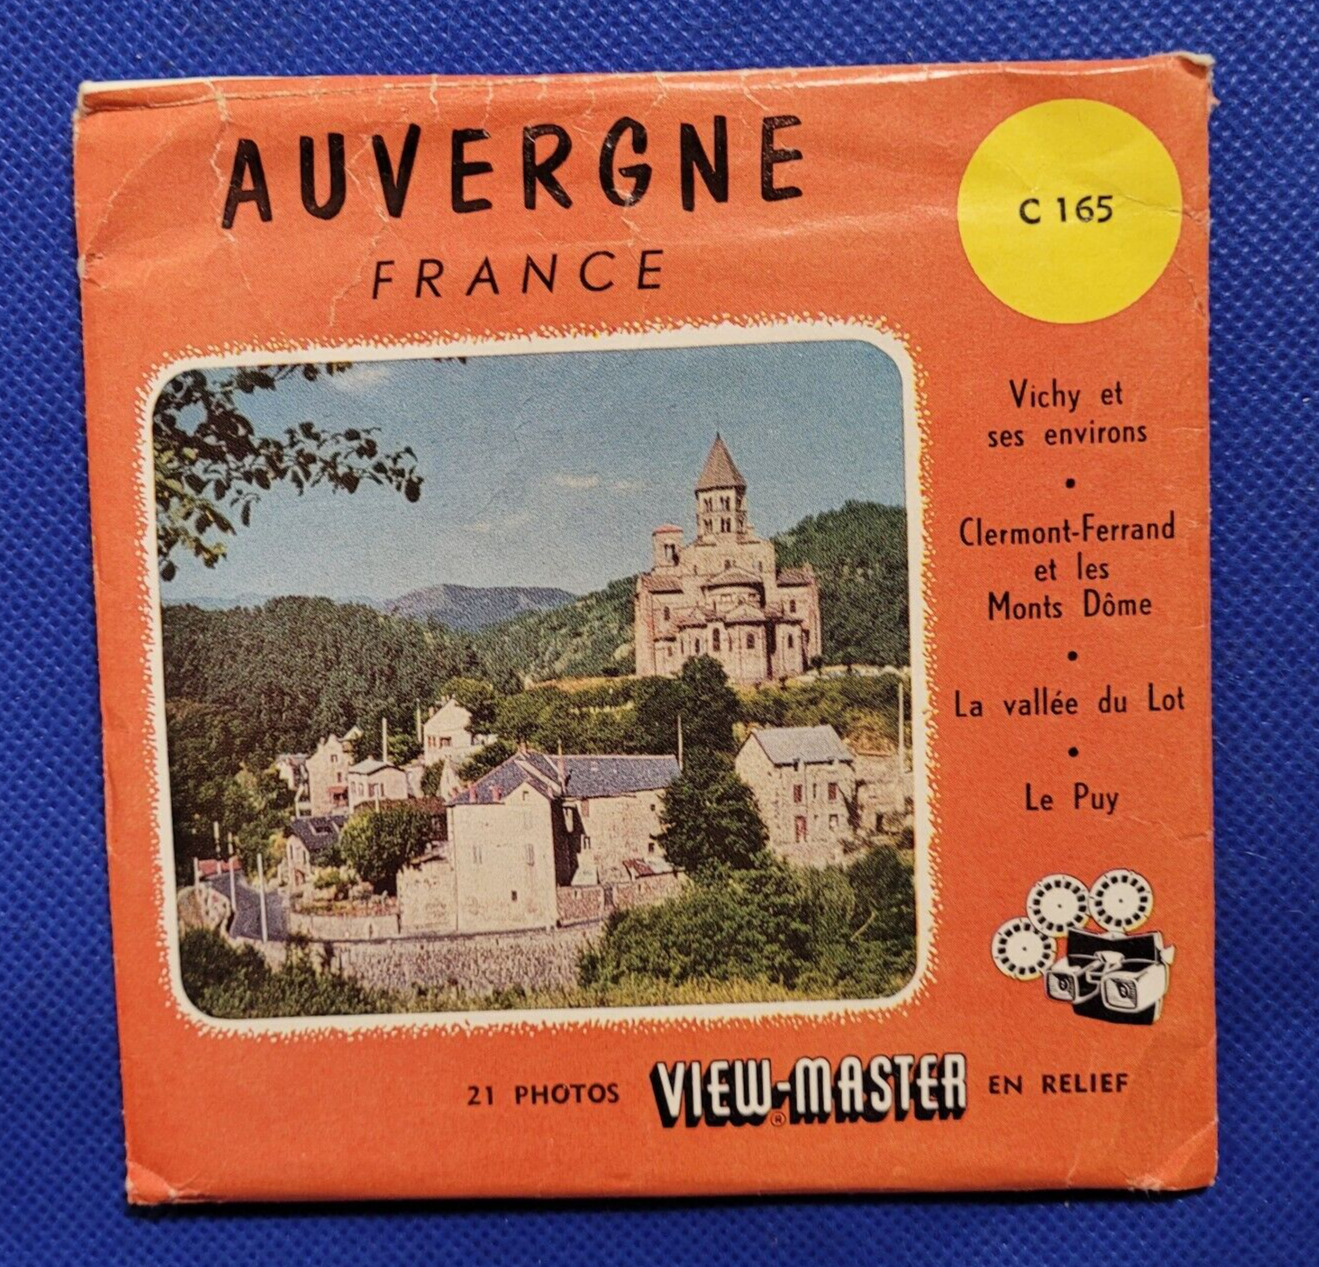 Vintage Sawyer\'s C165 Auvergne France view-master 3 Reels Packet SET